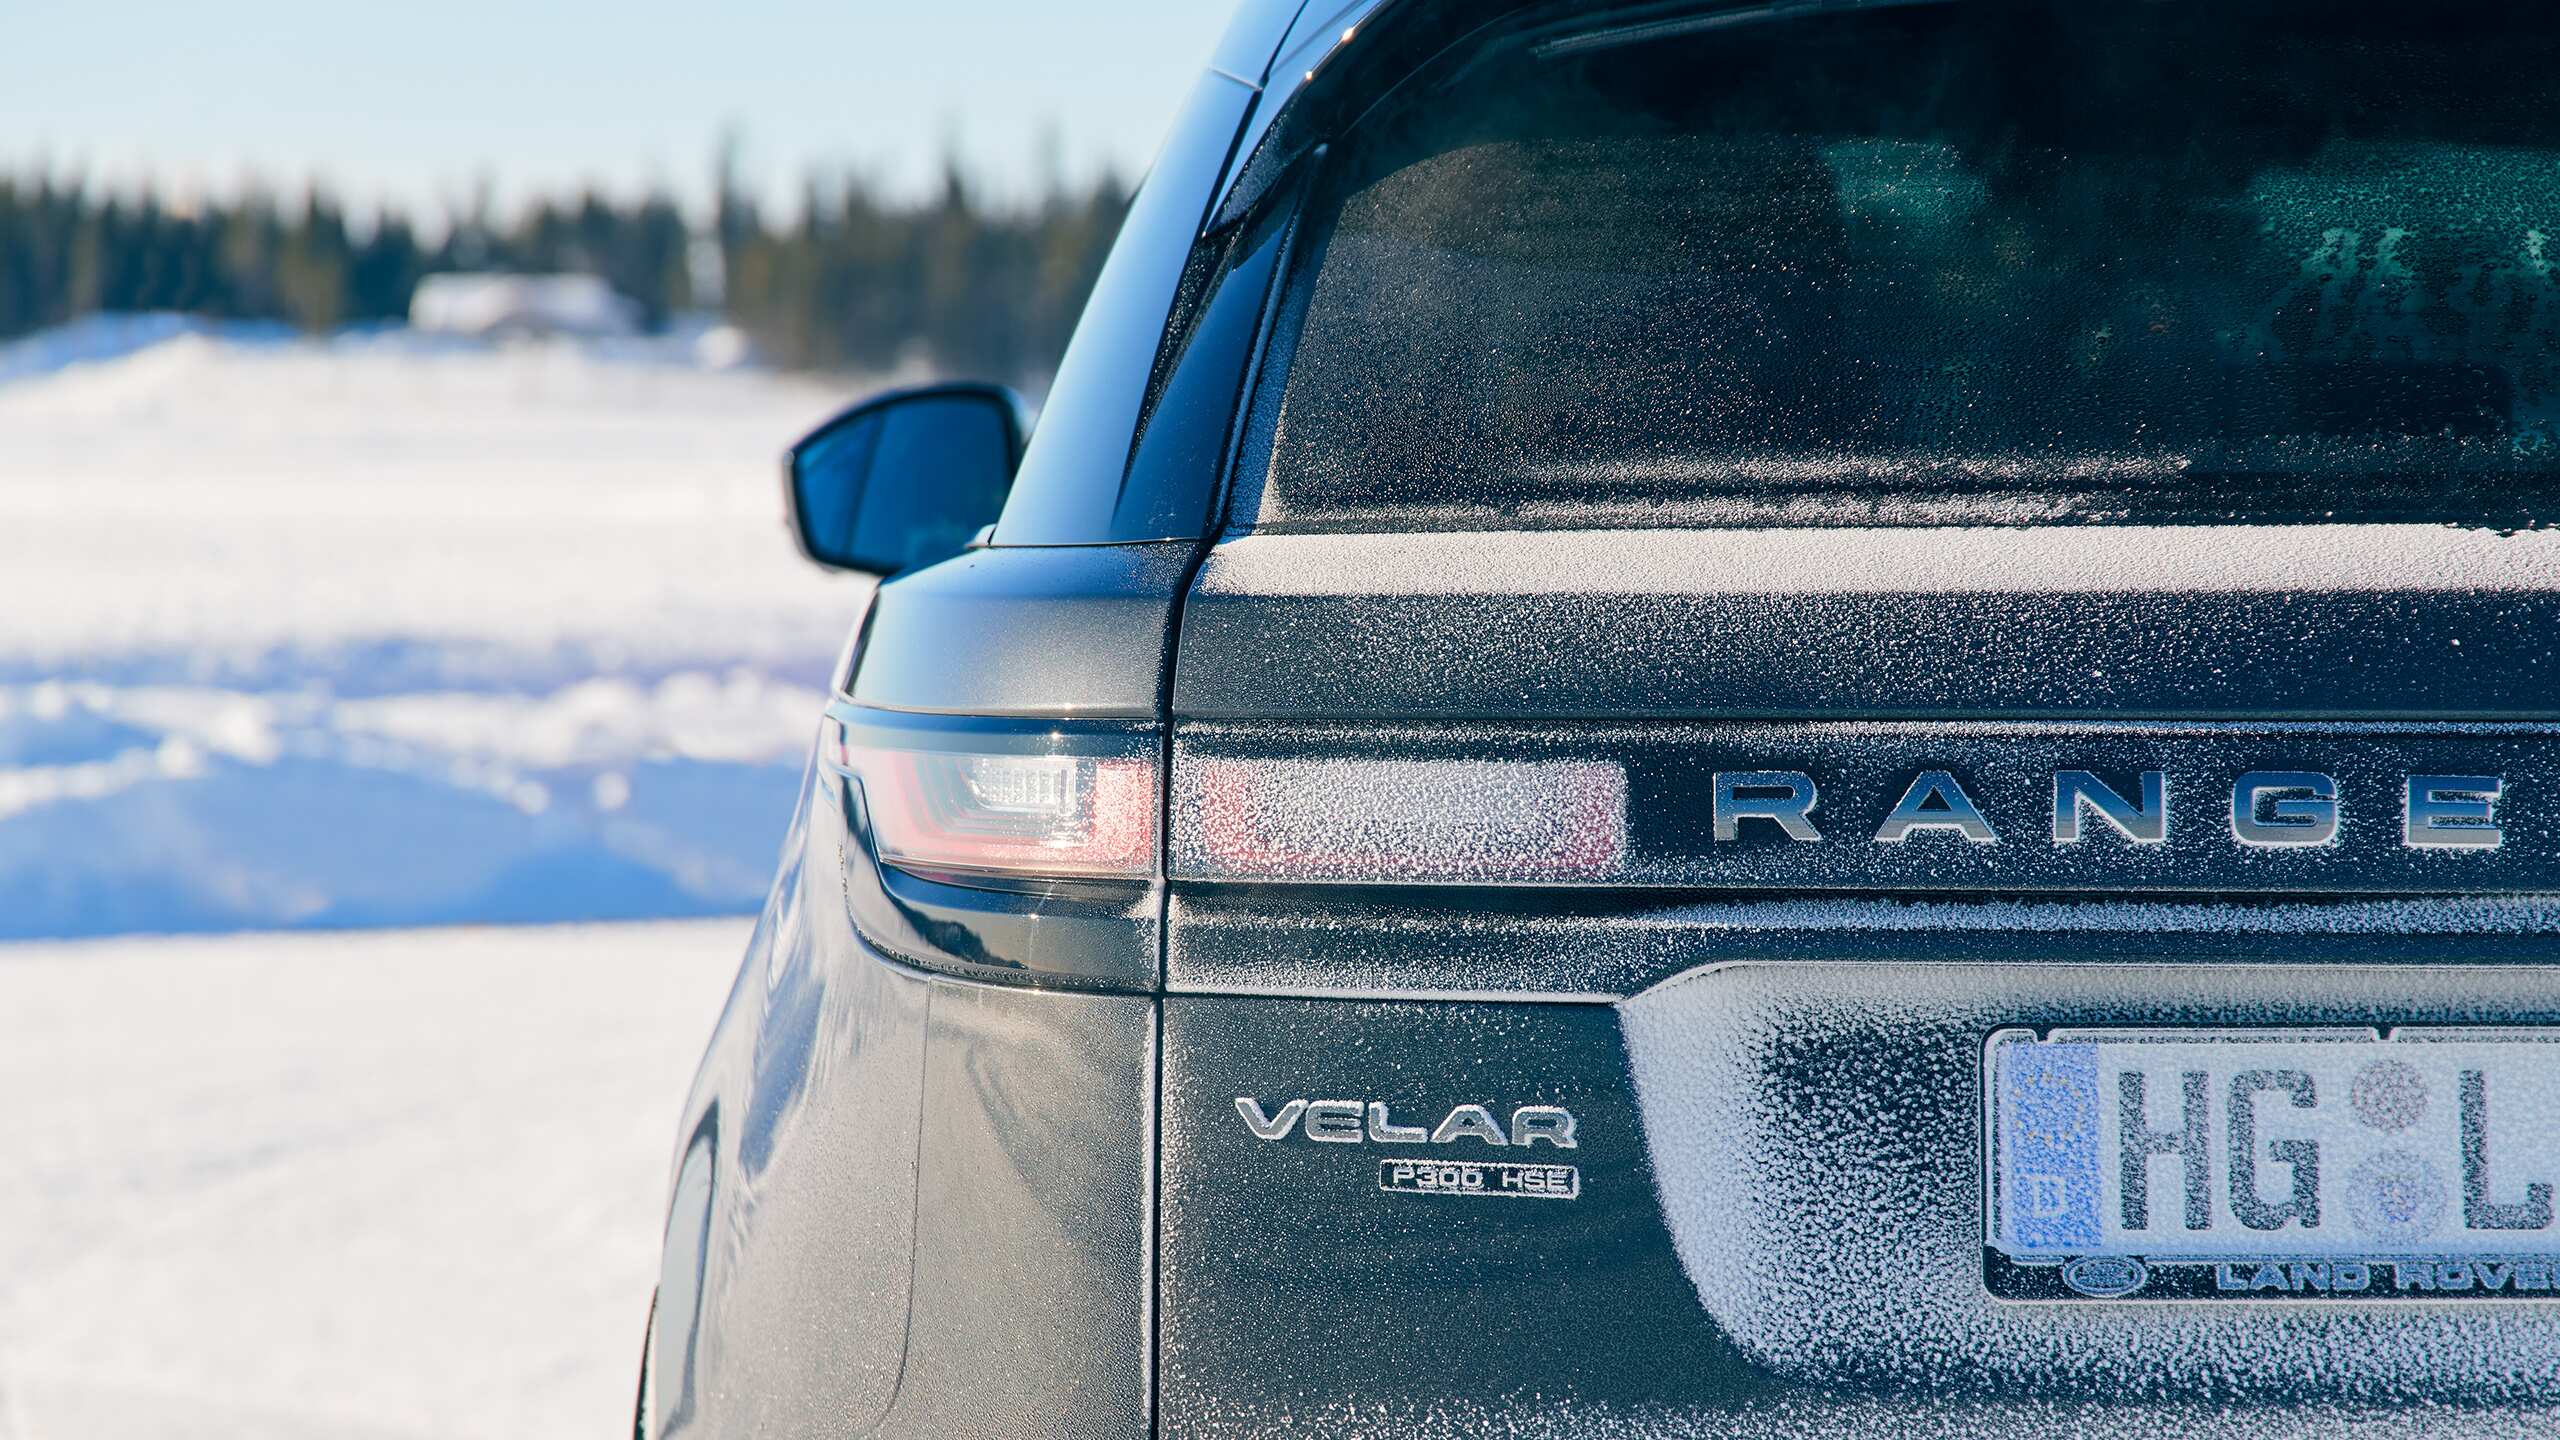 Velar car on snowy landscape, winter, back side close view